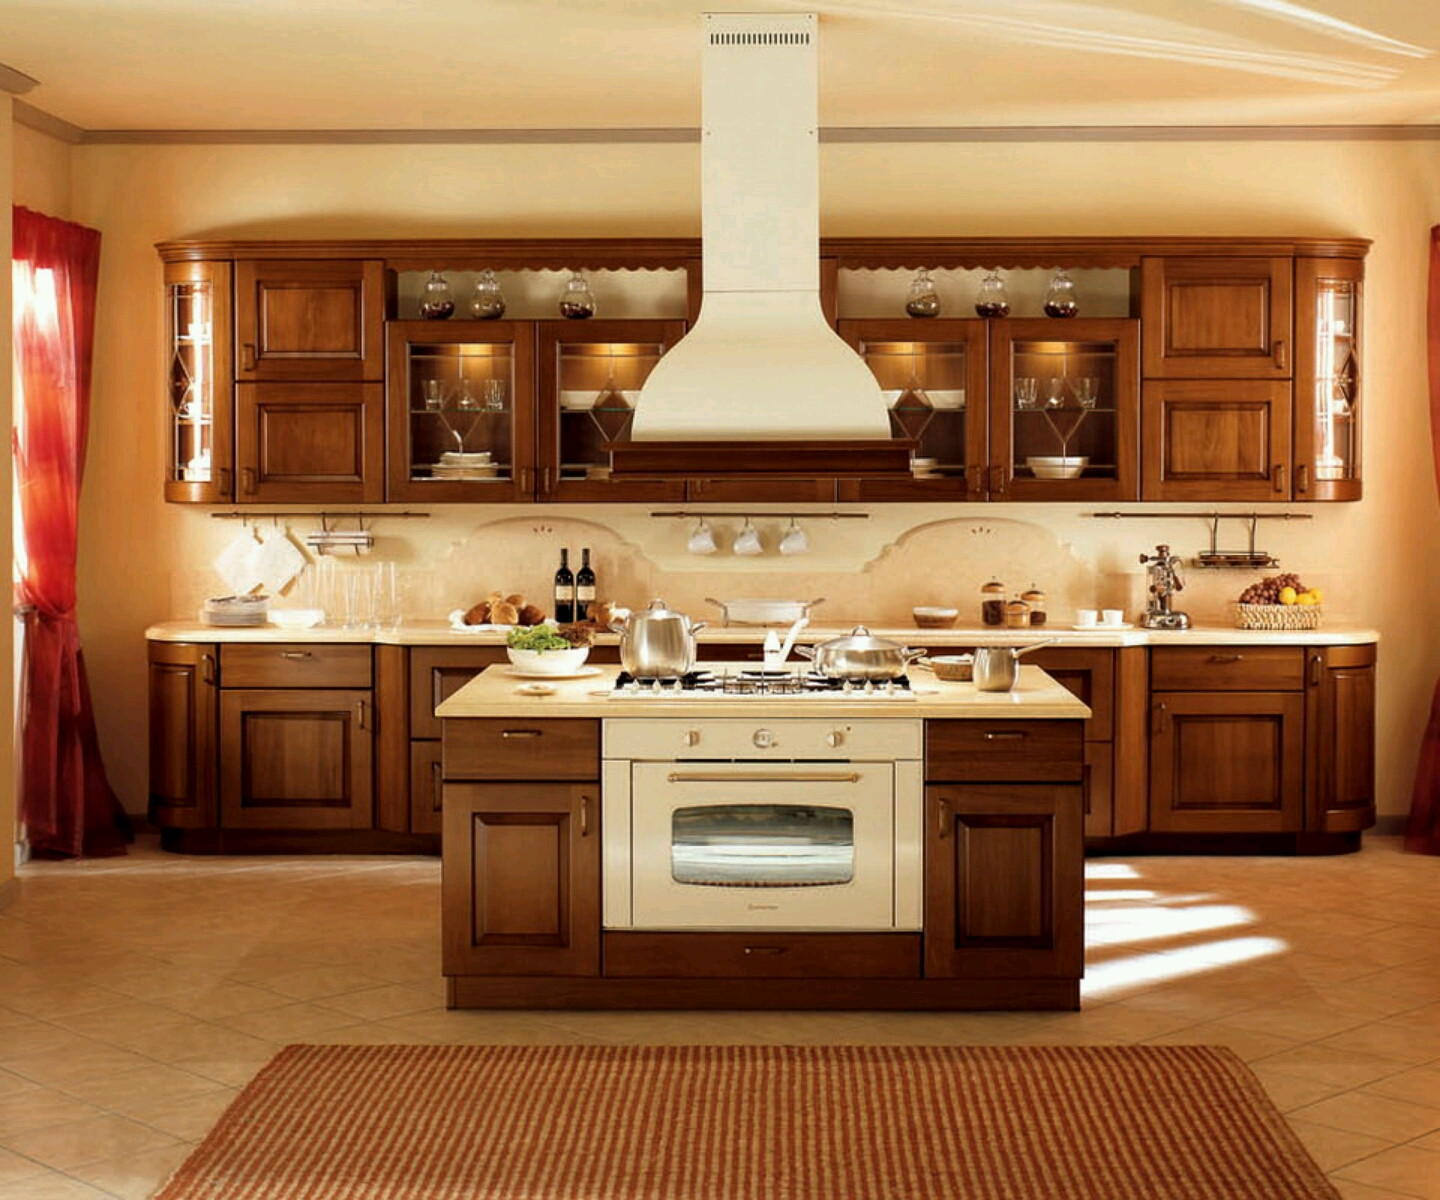 Kitchen Cabinets Design Ideas
 New home designs latest Modern kitchen cabinets designs